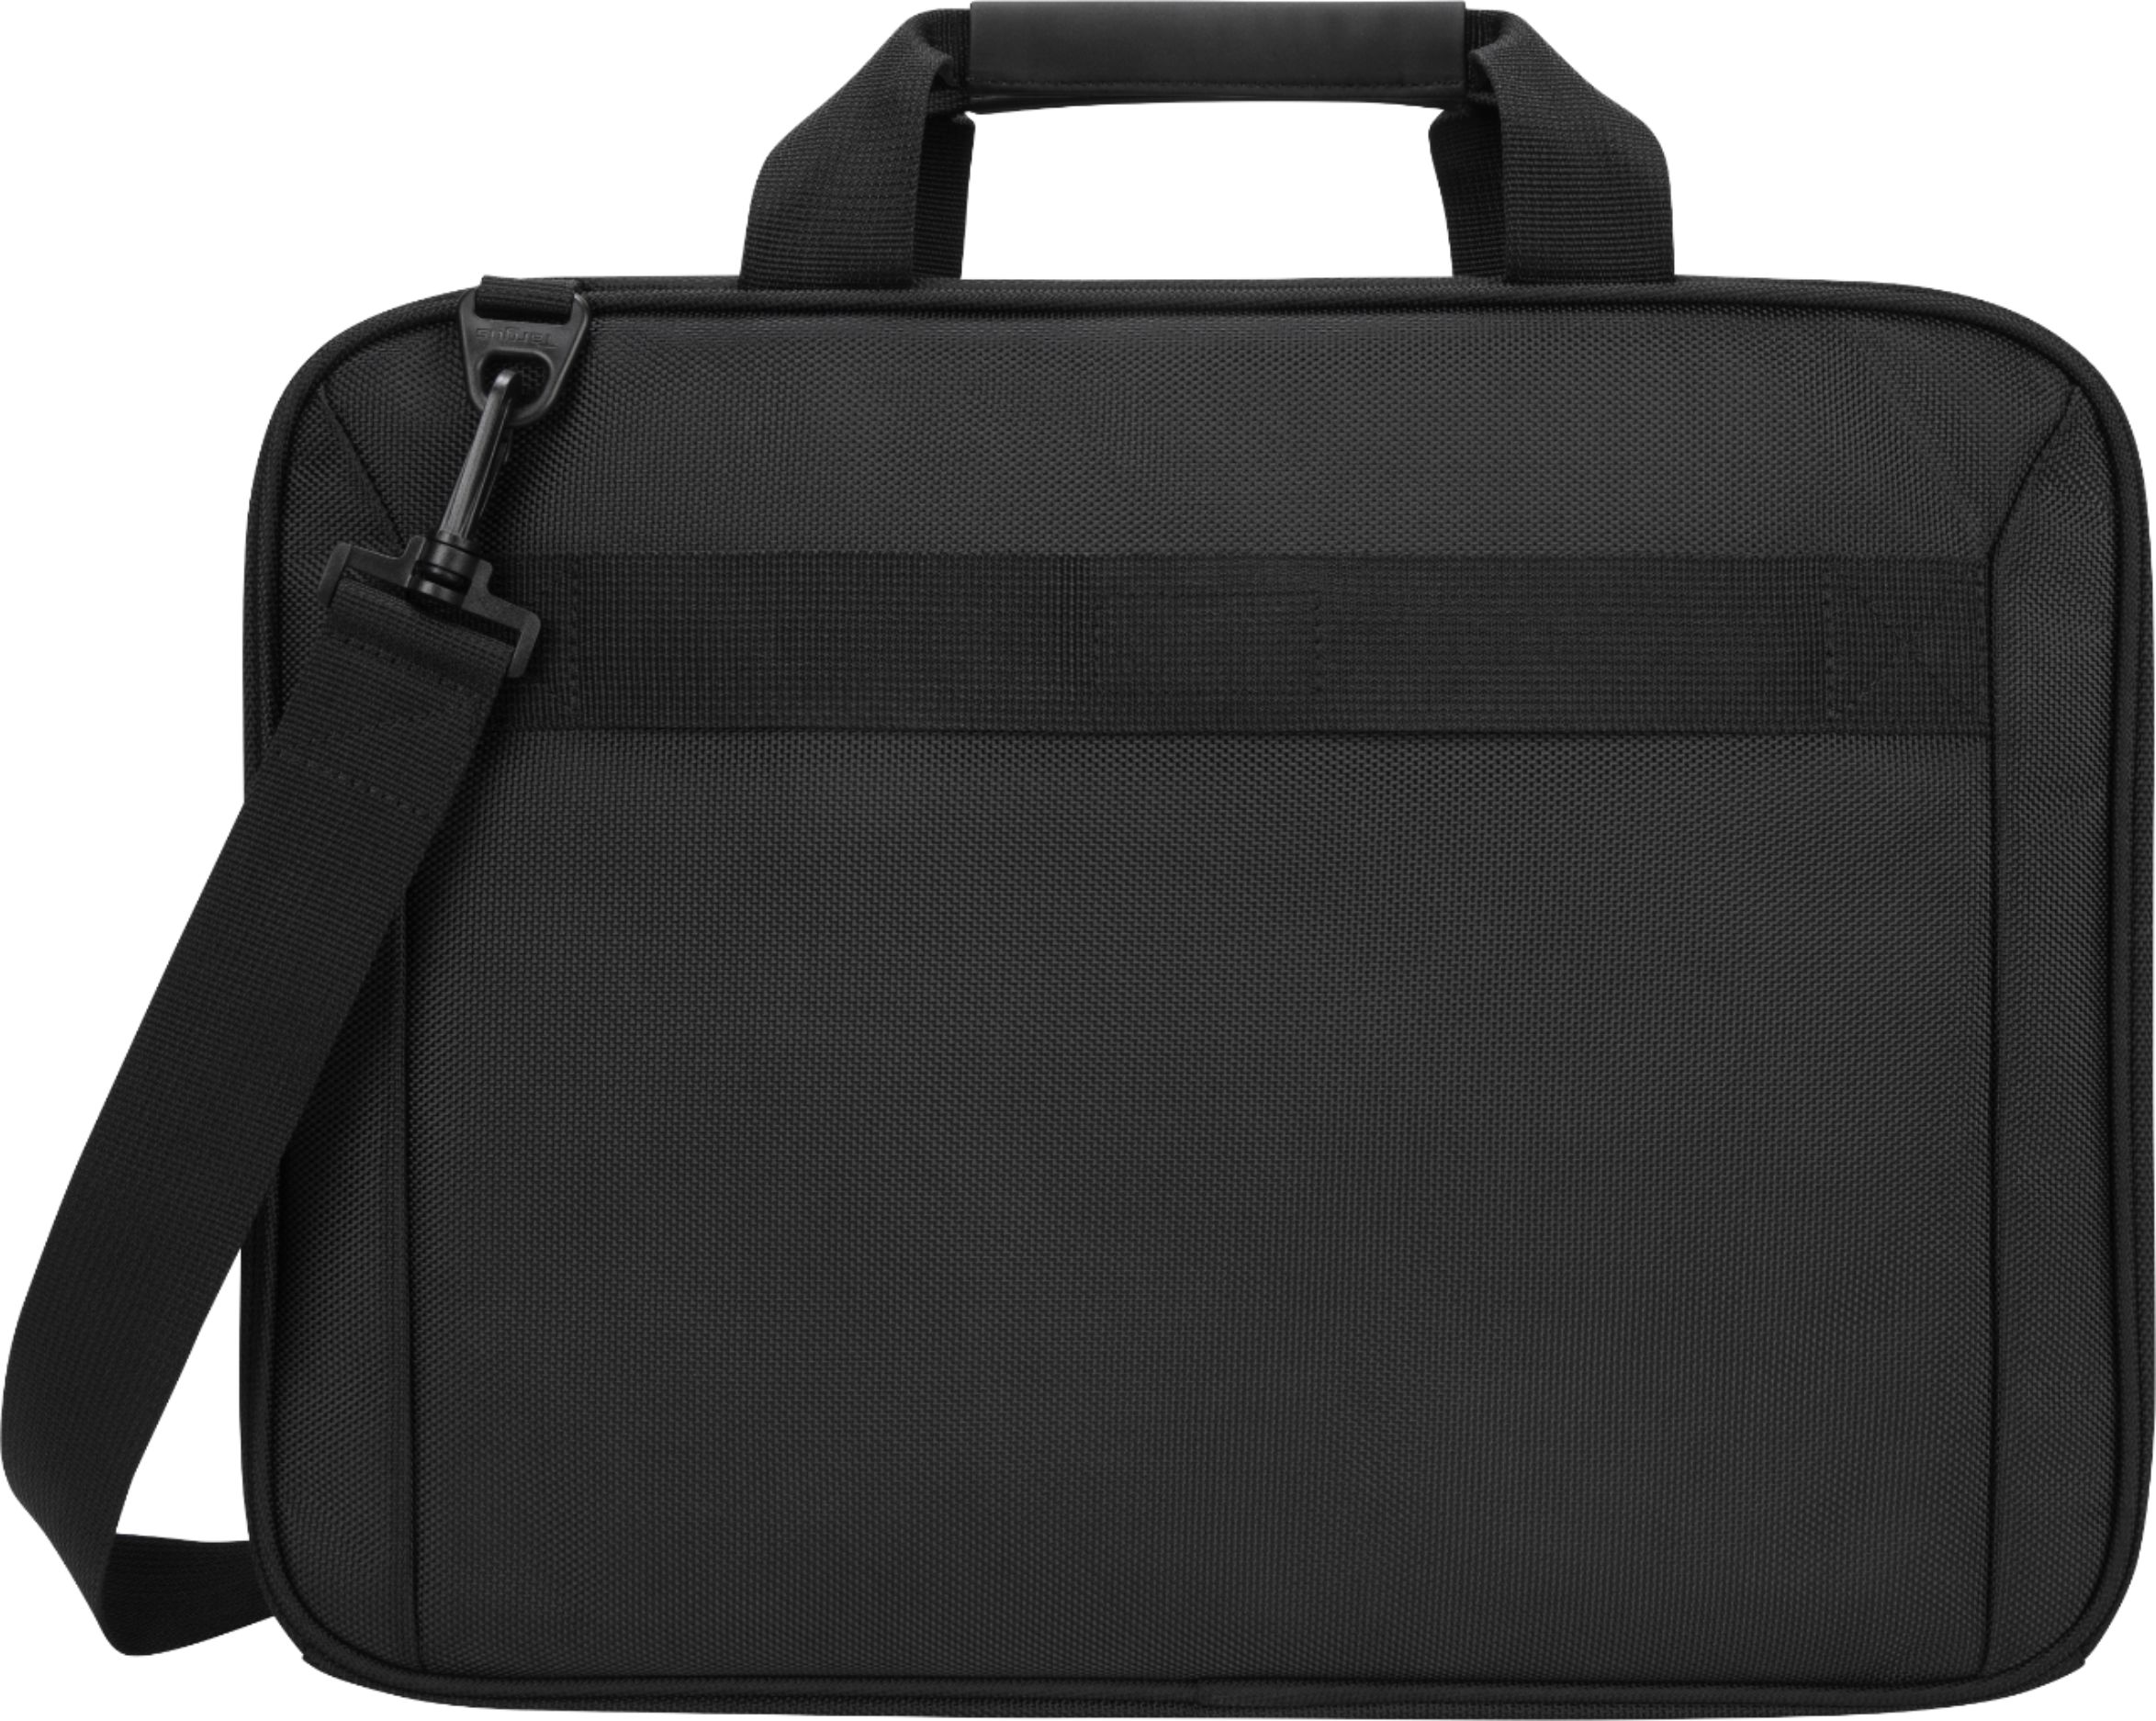 Back View: Targus - CityLite Laptop Case for 15.4" Laptop - Black